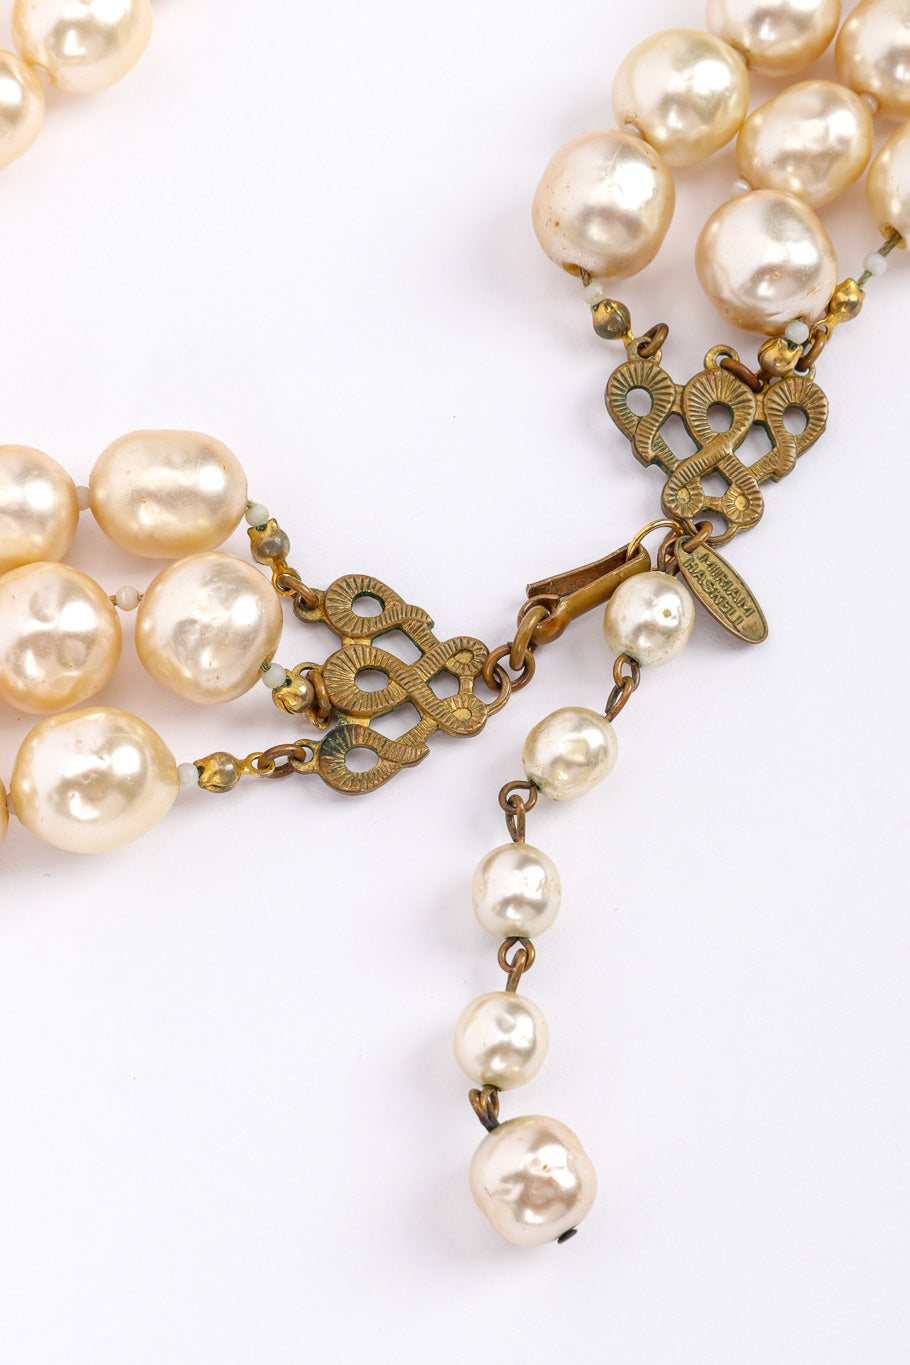 Vintage Miriam Haskell 3-Strand Pearl Collar Necklace view of clasp closure @recessla